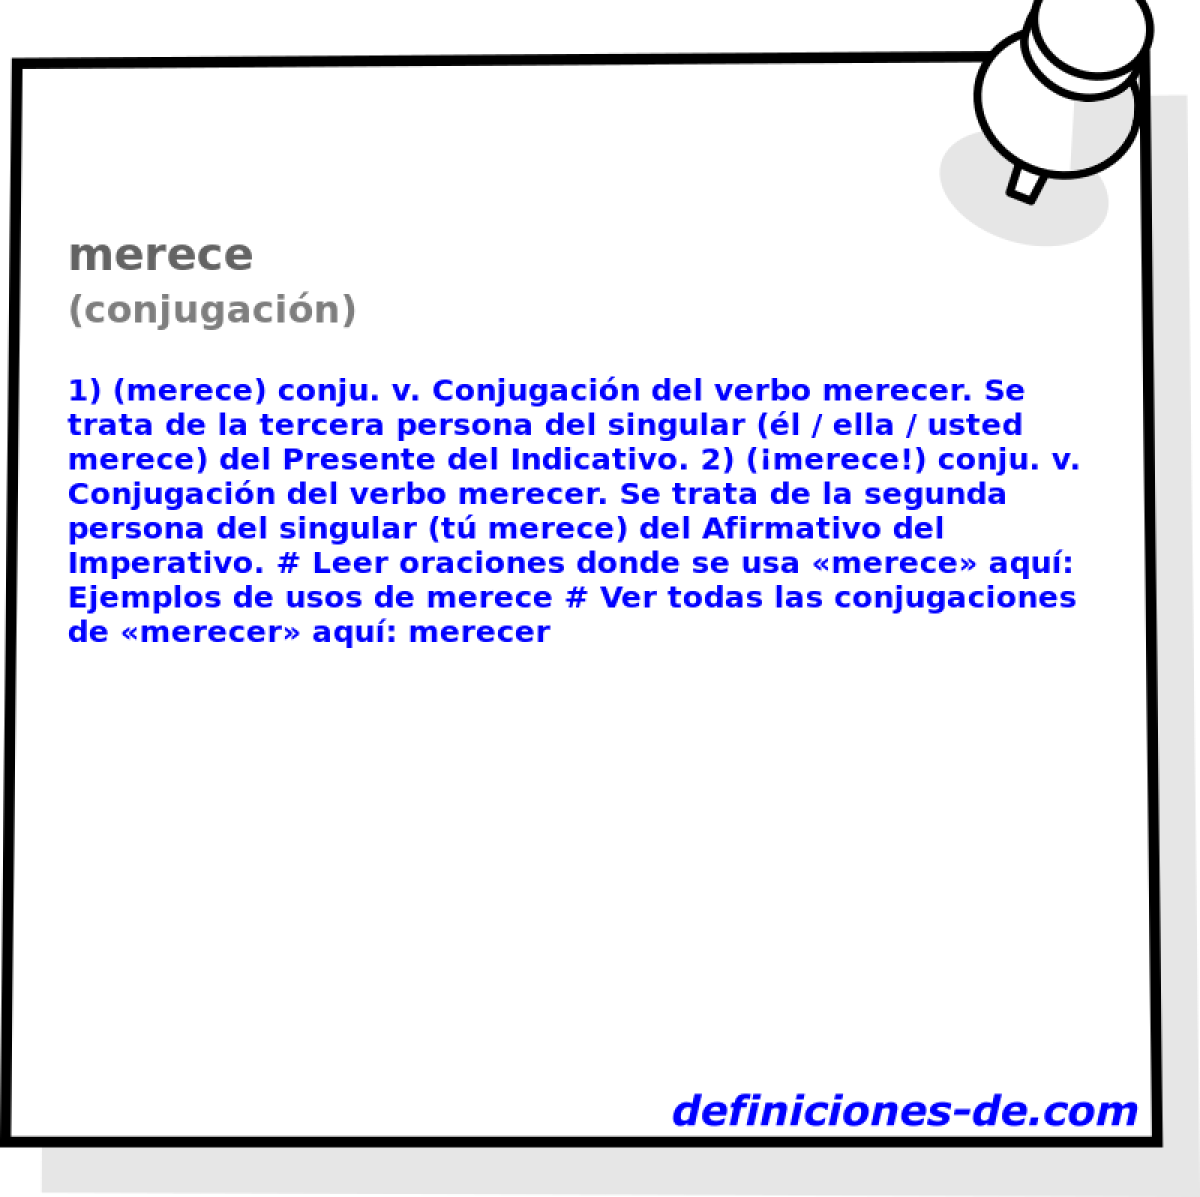 merece (conjugacin)